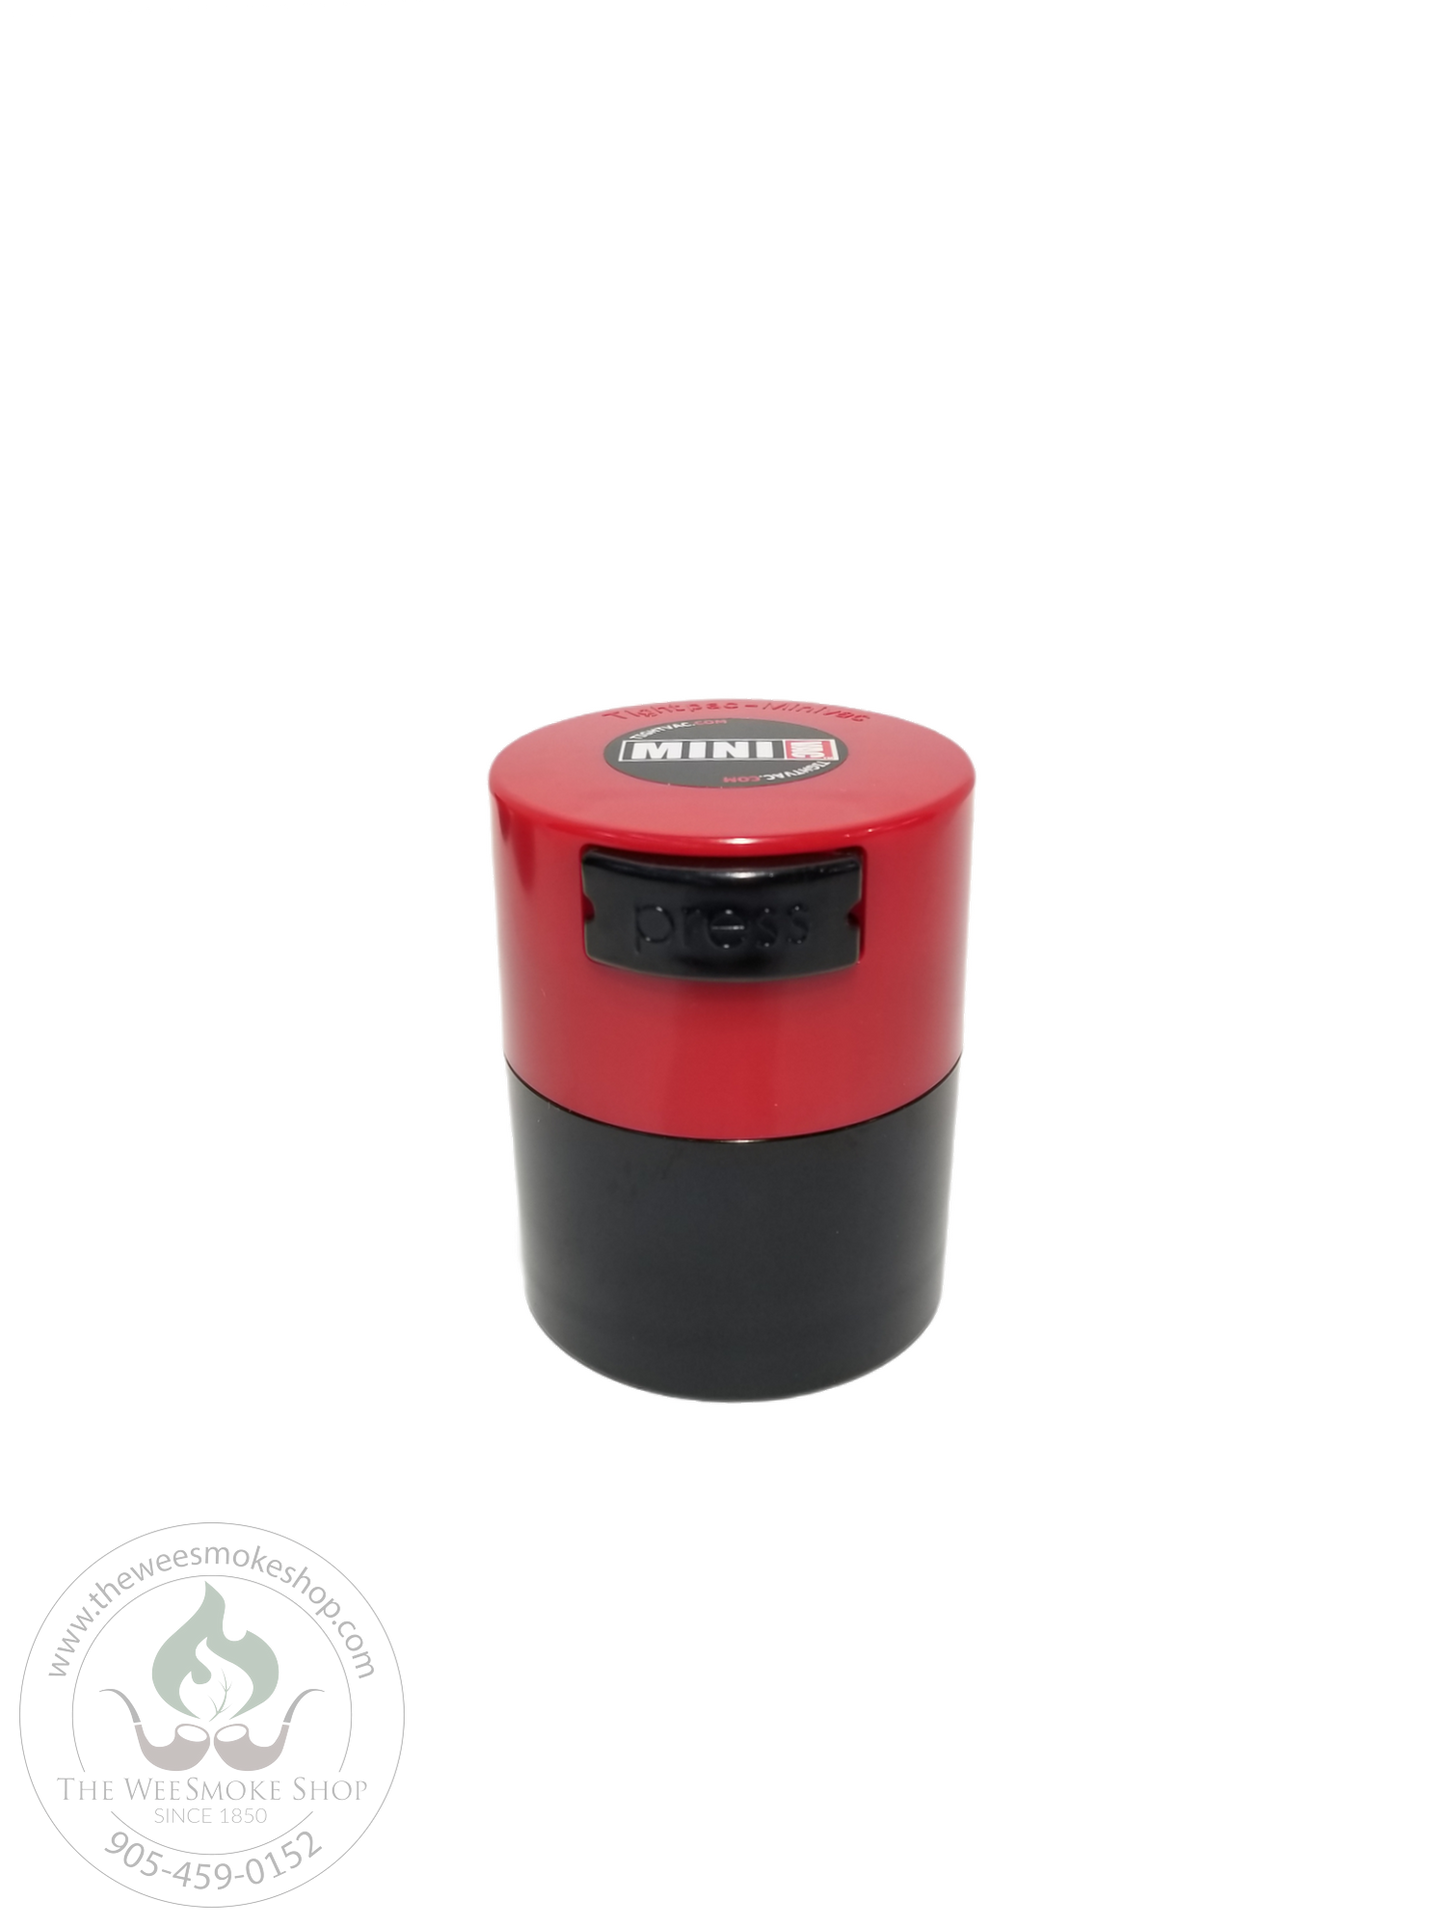 Black and Red Tight Vac 0.12L (Mini Vac)-storage-The Wee Smoke Shop